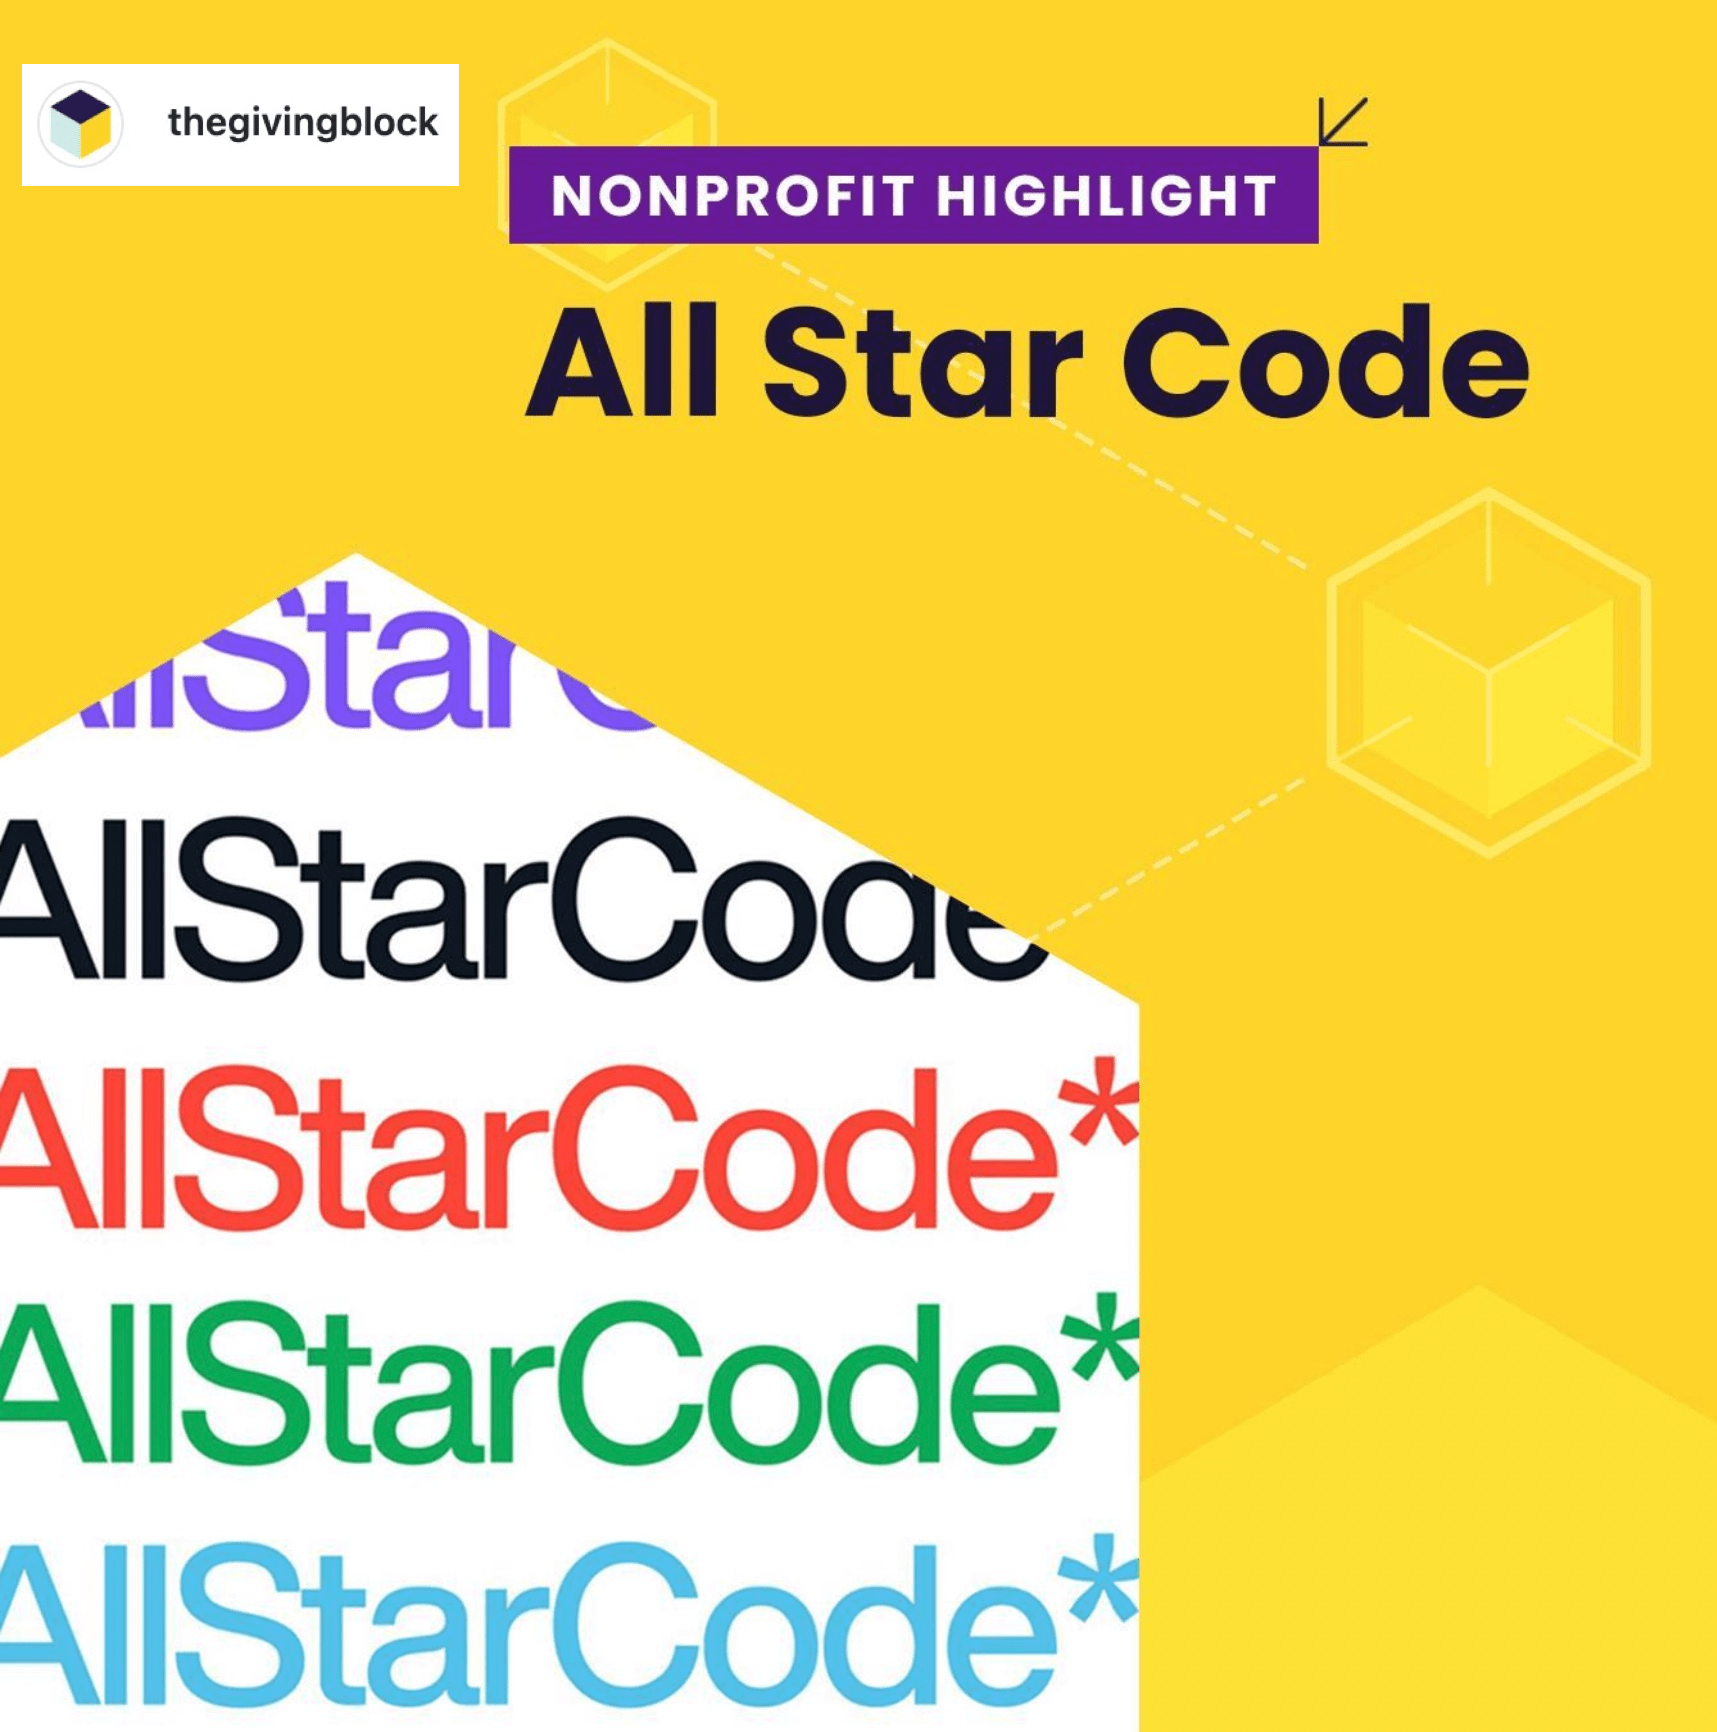 All Star Code - Org Chart, Teams, Culture & Jobs